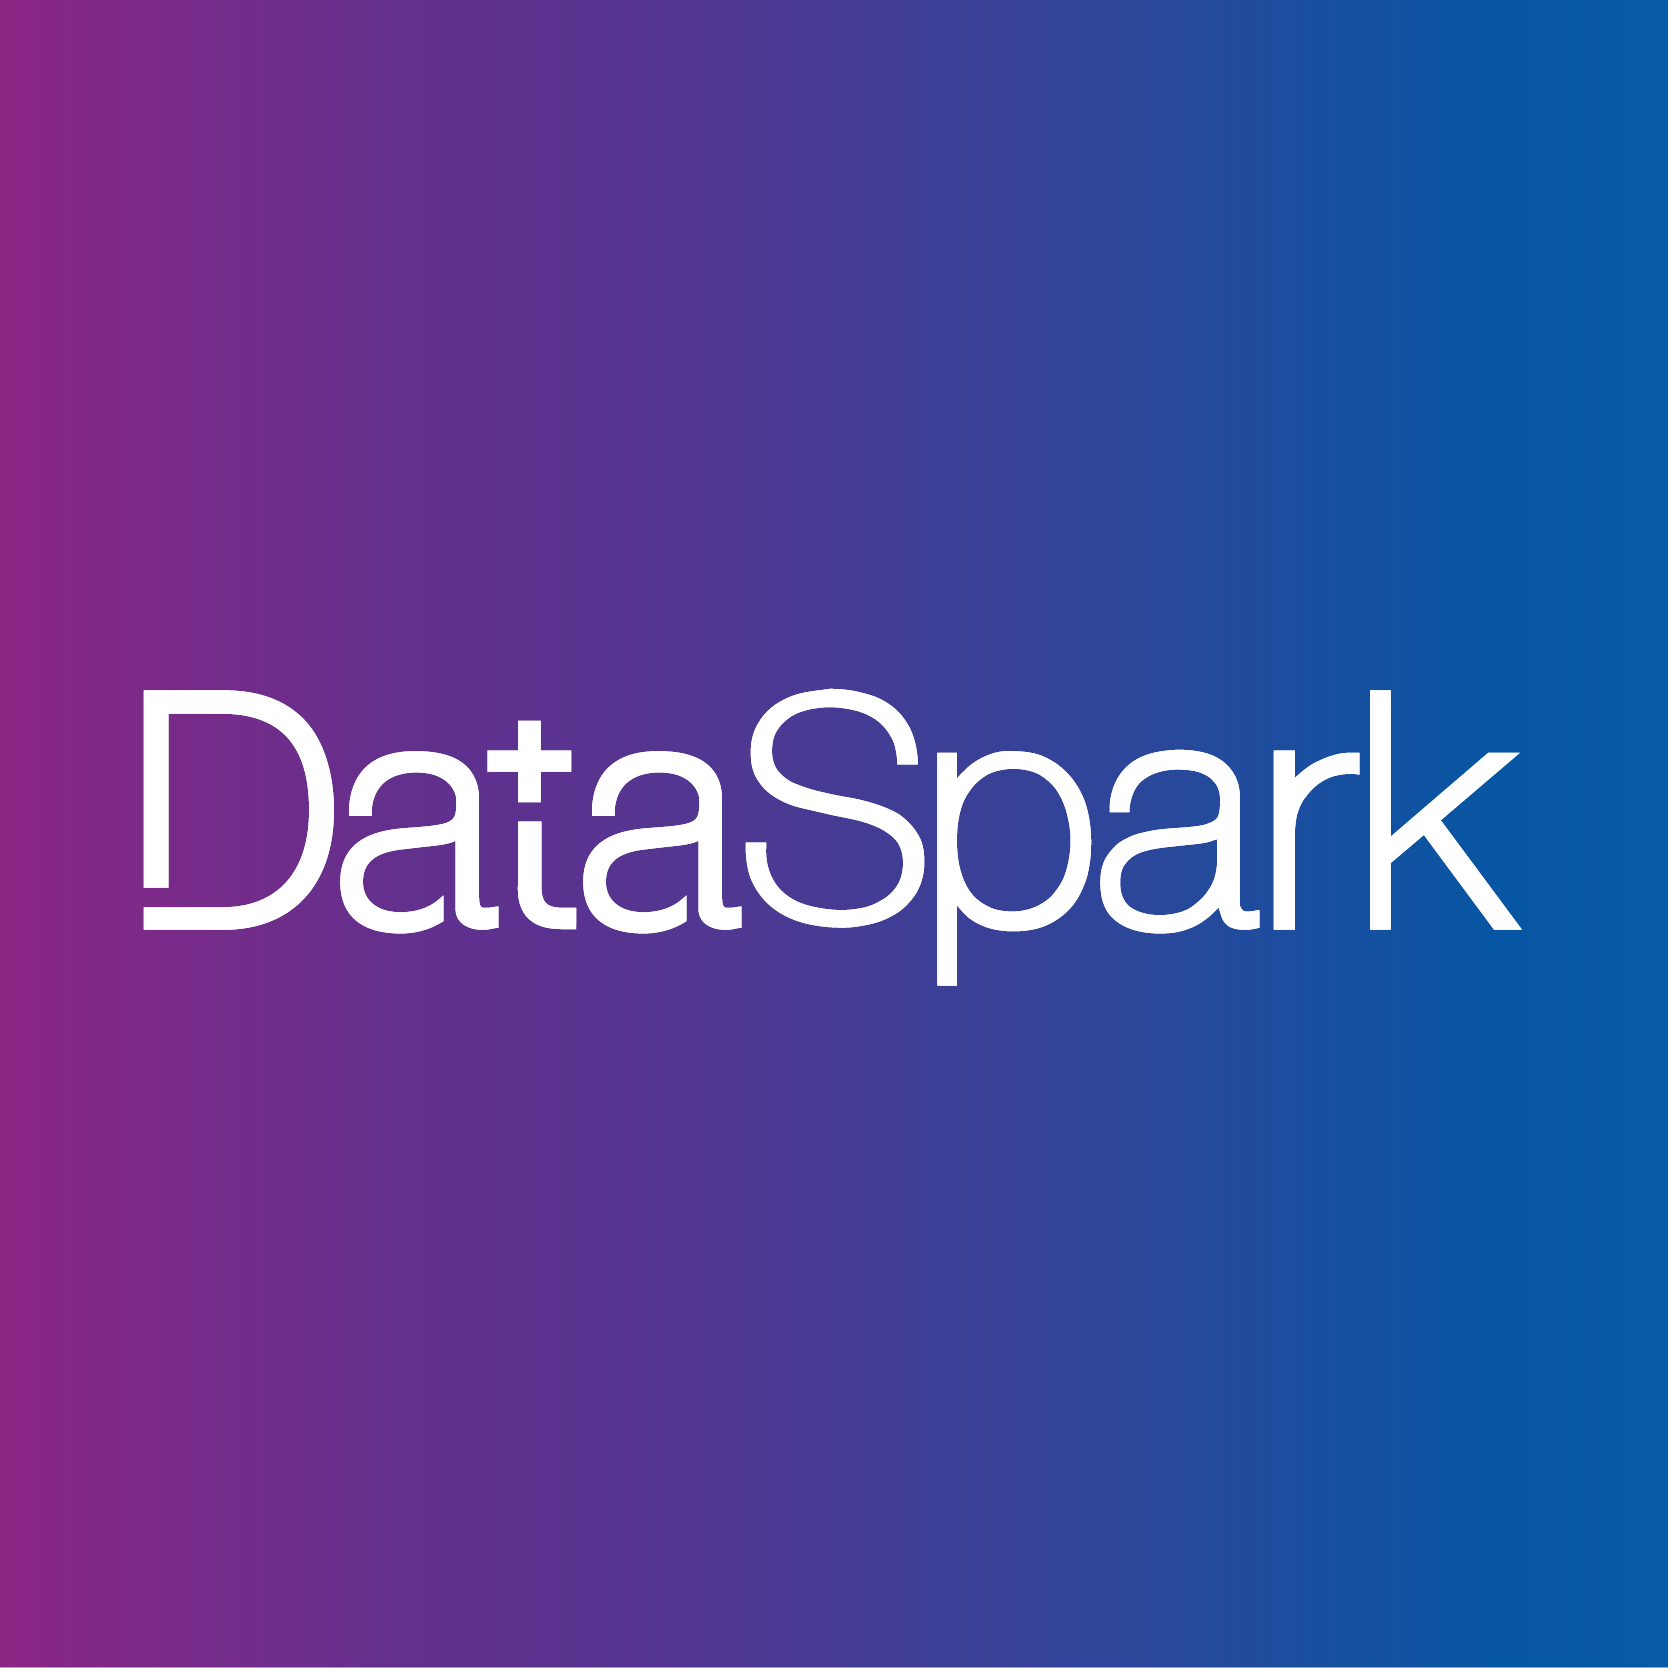 Dataspark Pte Ltd.